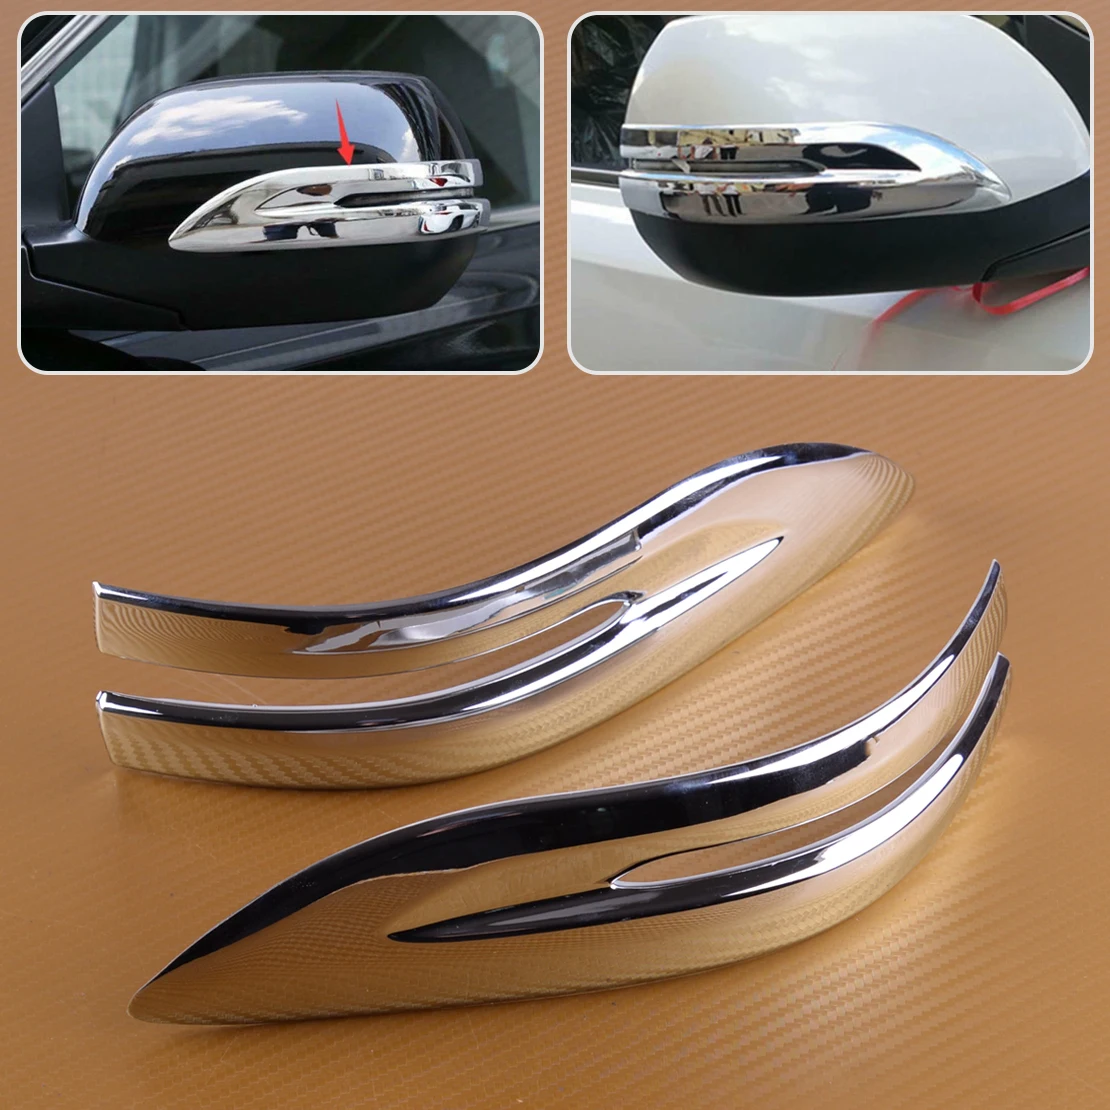 DWCX-cubierta de espejo retrovisor lateral de coche, accesorio cromado duradero, a rayas, embellecedor, apto para Honda CRV CR-V 2017 2018 2019, 2 uds.